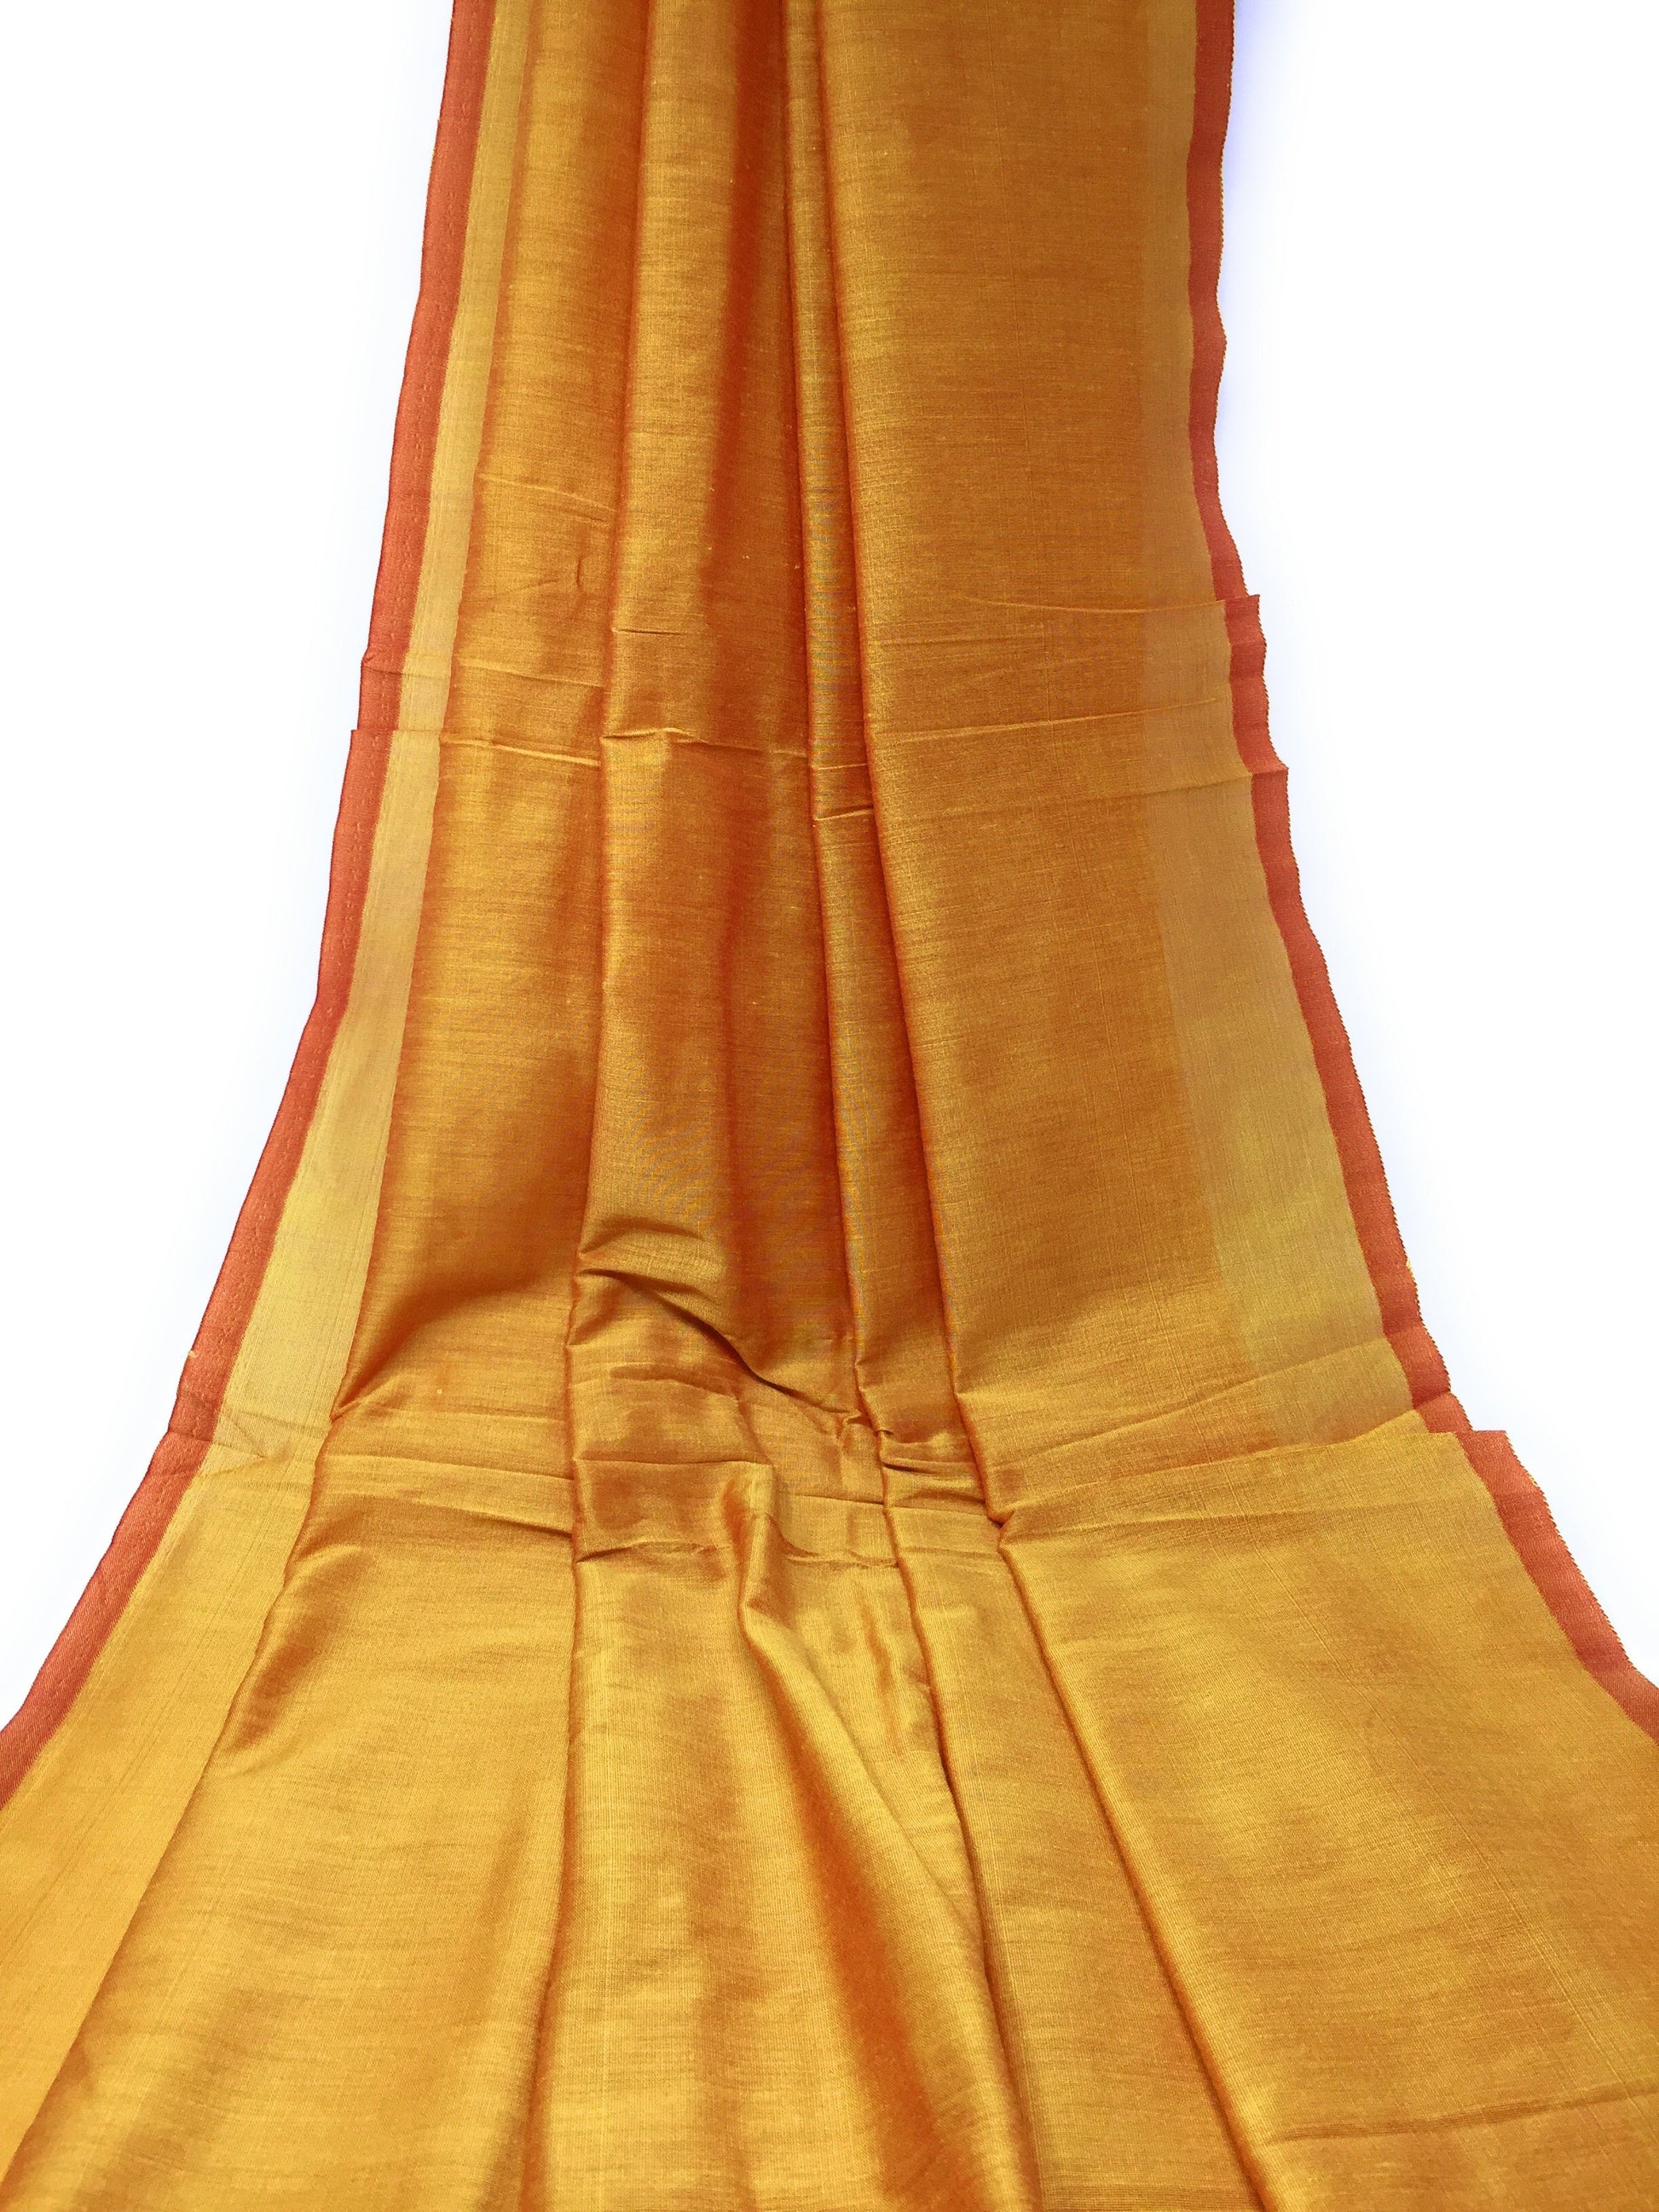 Mango Yellow Cotton Silk Dress Material